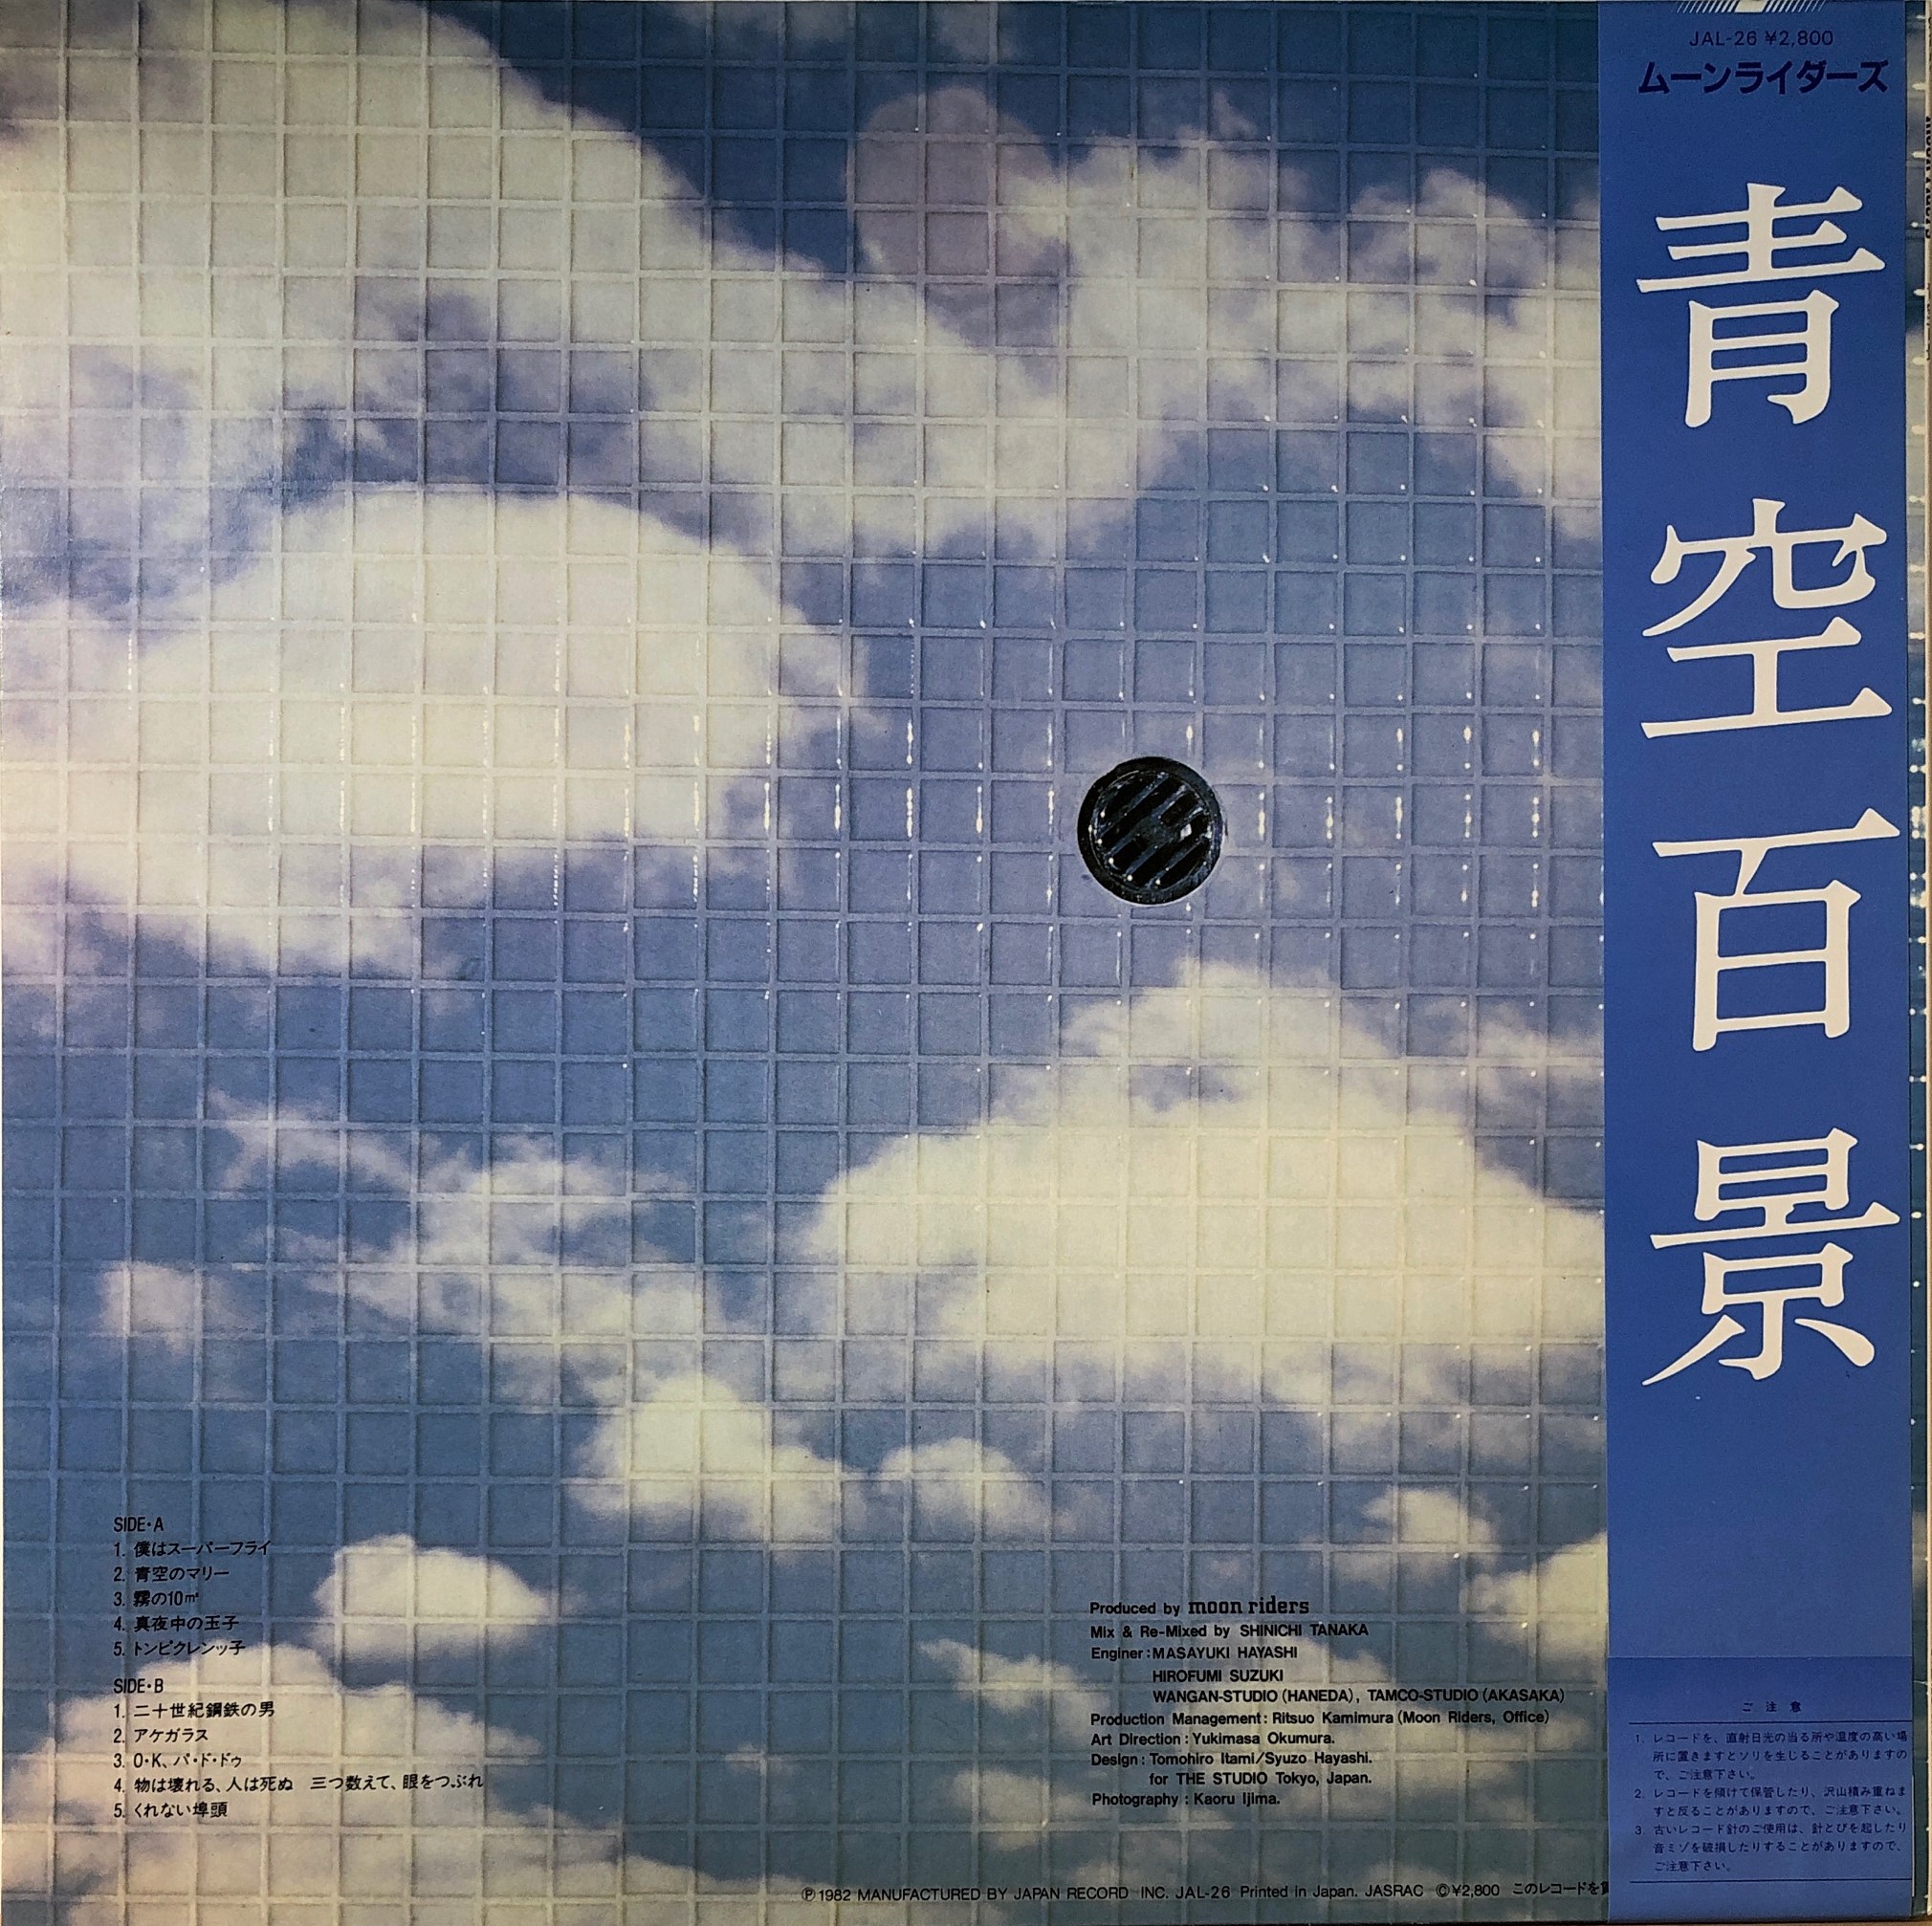 Moonriders - 青空百景 | 中古レコード通販・買取のアカル・レコーズ